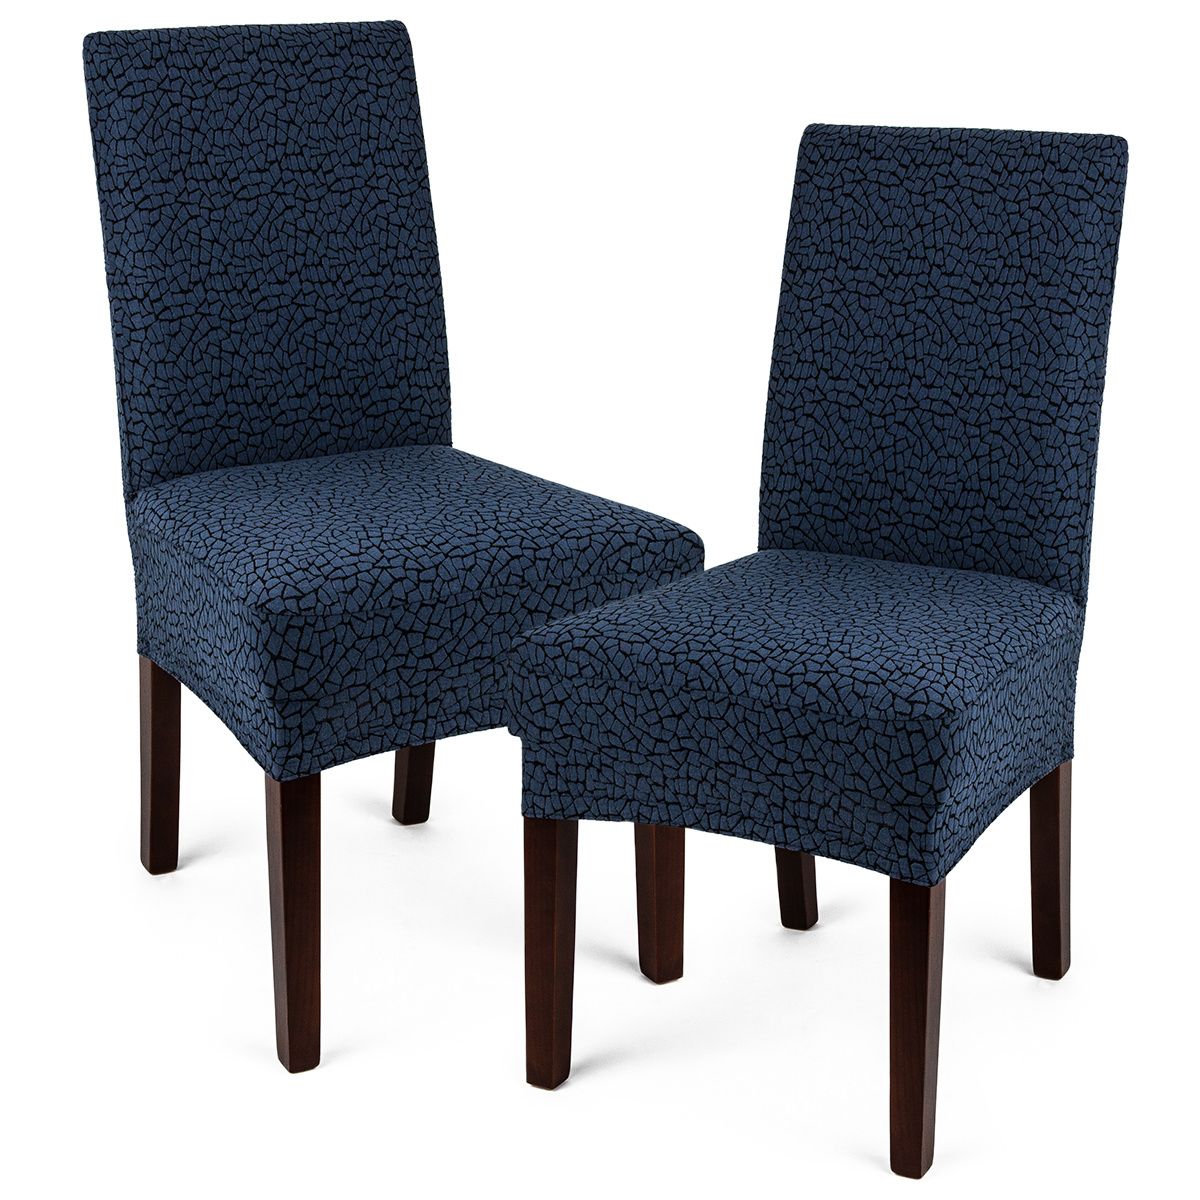 4Home Multielastický potah na židli Comfort Plus modrá, 40 - 50 cm, sada 2 ks - 4home.cz